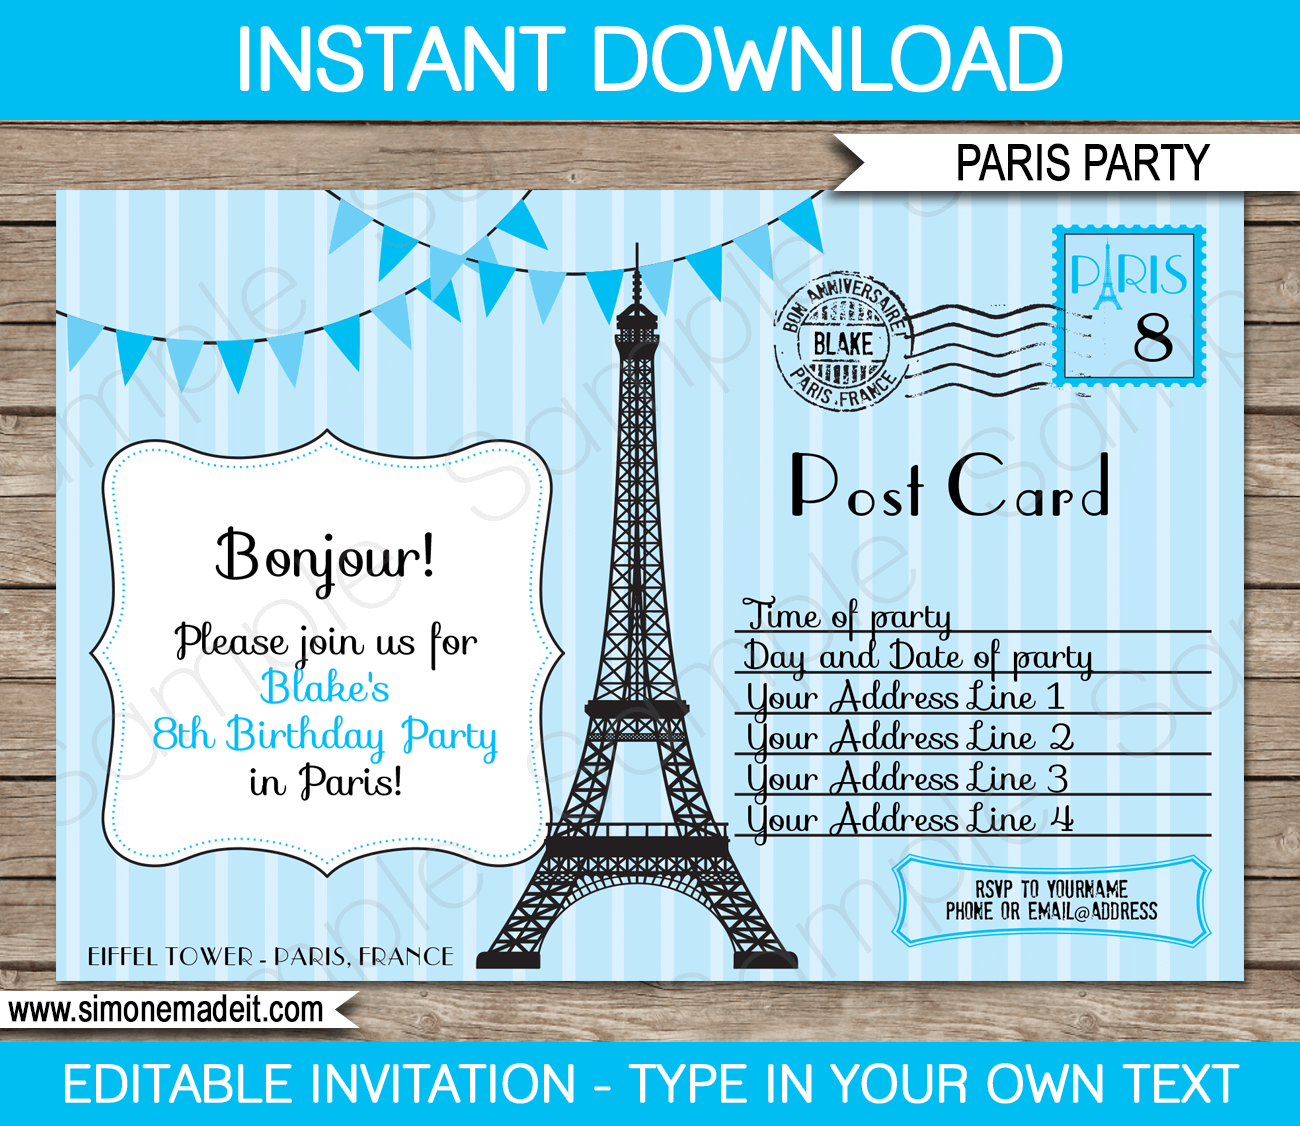 Blue Paris Birthday Party Invitations | Postcard to Paris | Editable & Printable Template | $7.50 INSTANT DOWNLOAD via simonemadeit.com 